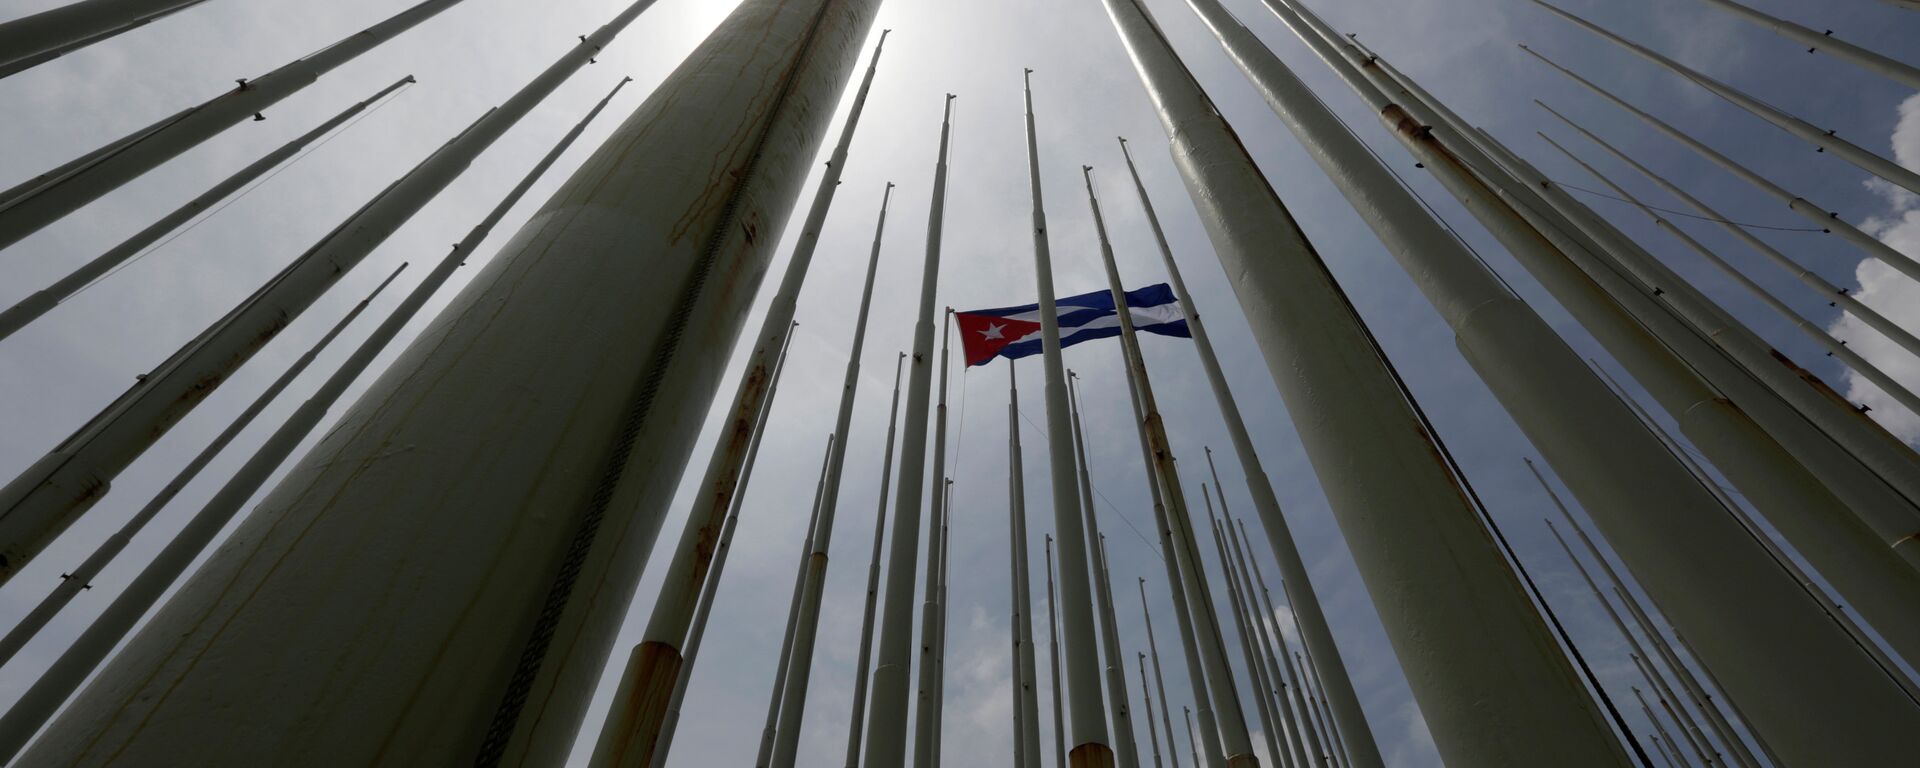 Bandera de Cuba frente de la embajada de EEUU en La Habana - Sputnik Mundo, 1920, 09.06.2021